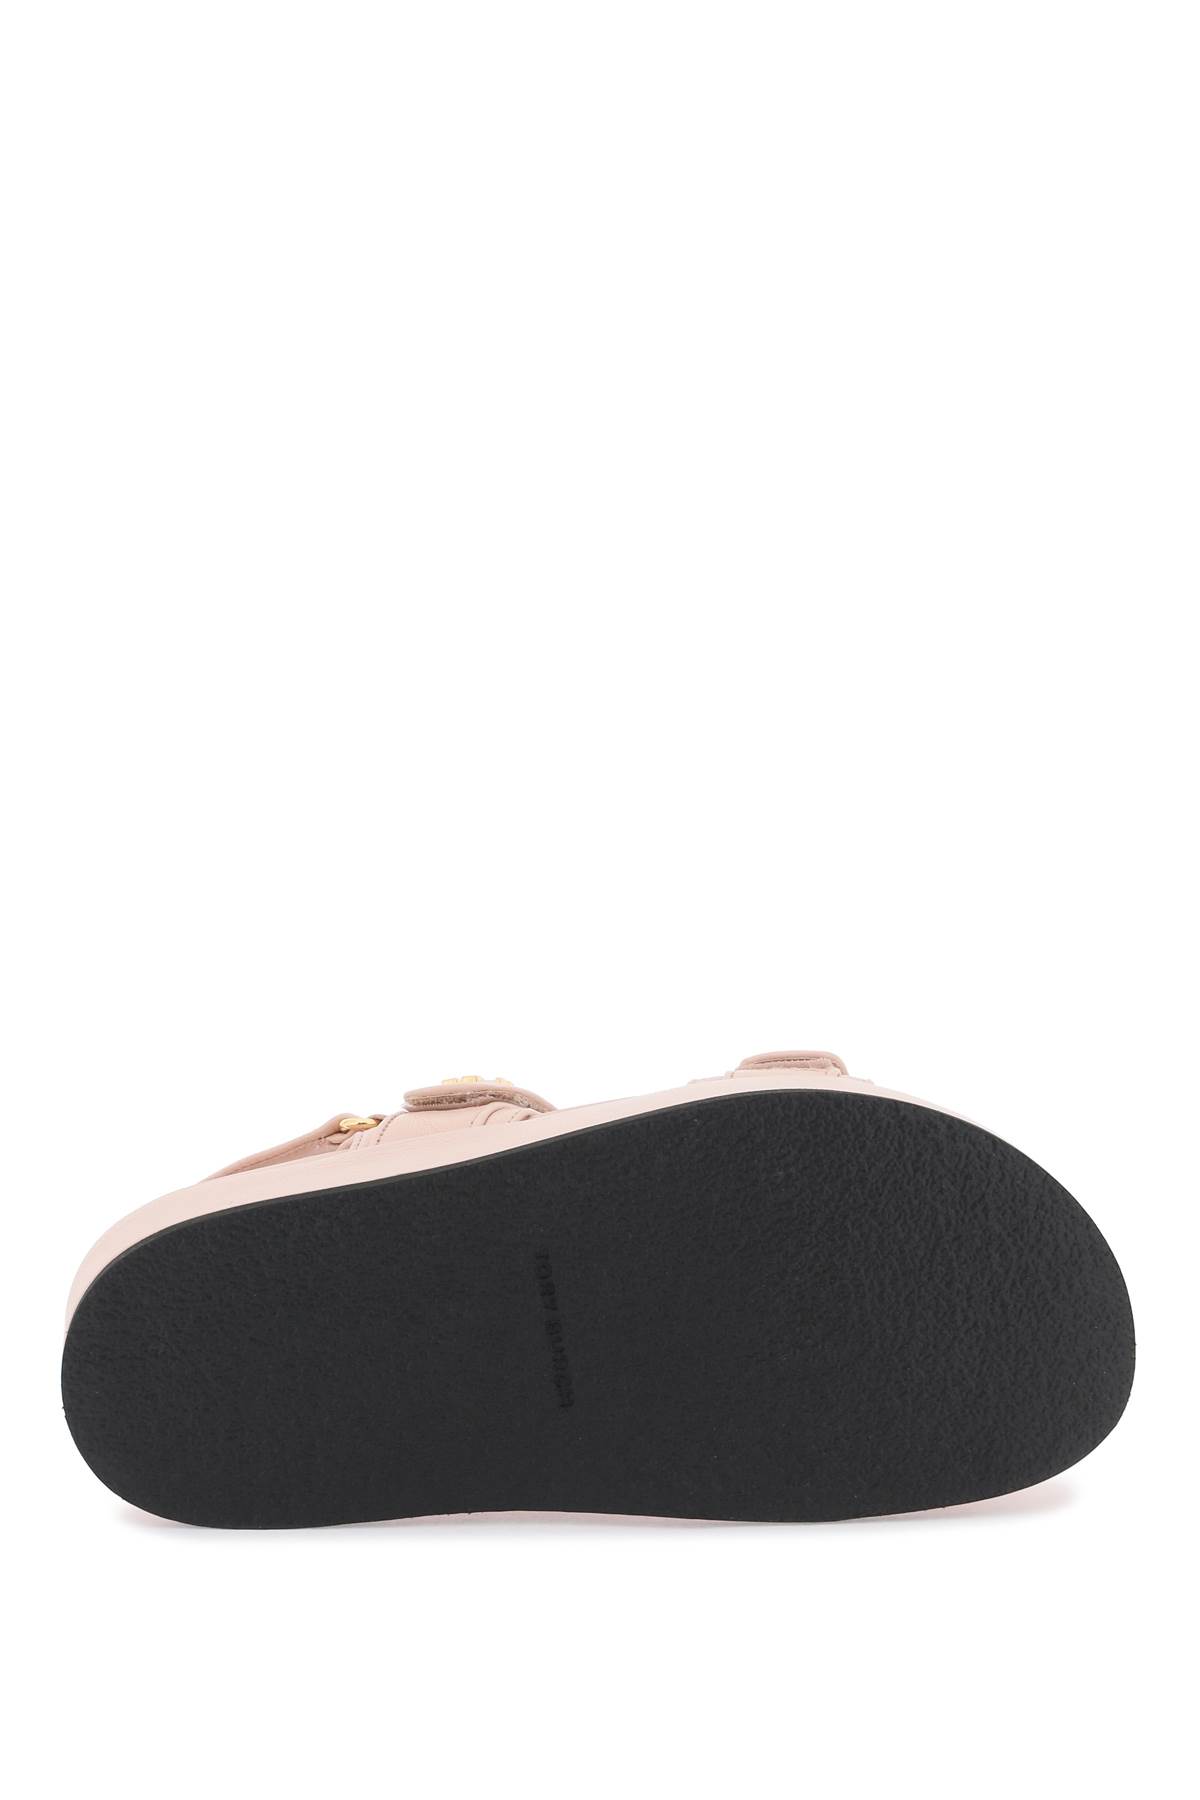 Shop Tory Burch Kira Sport Sandals In Shell Pink (black)